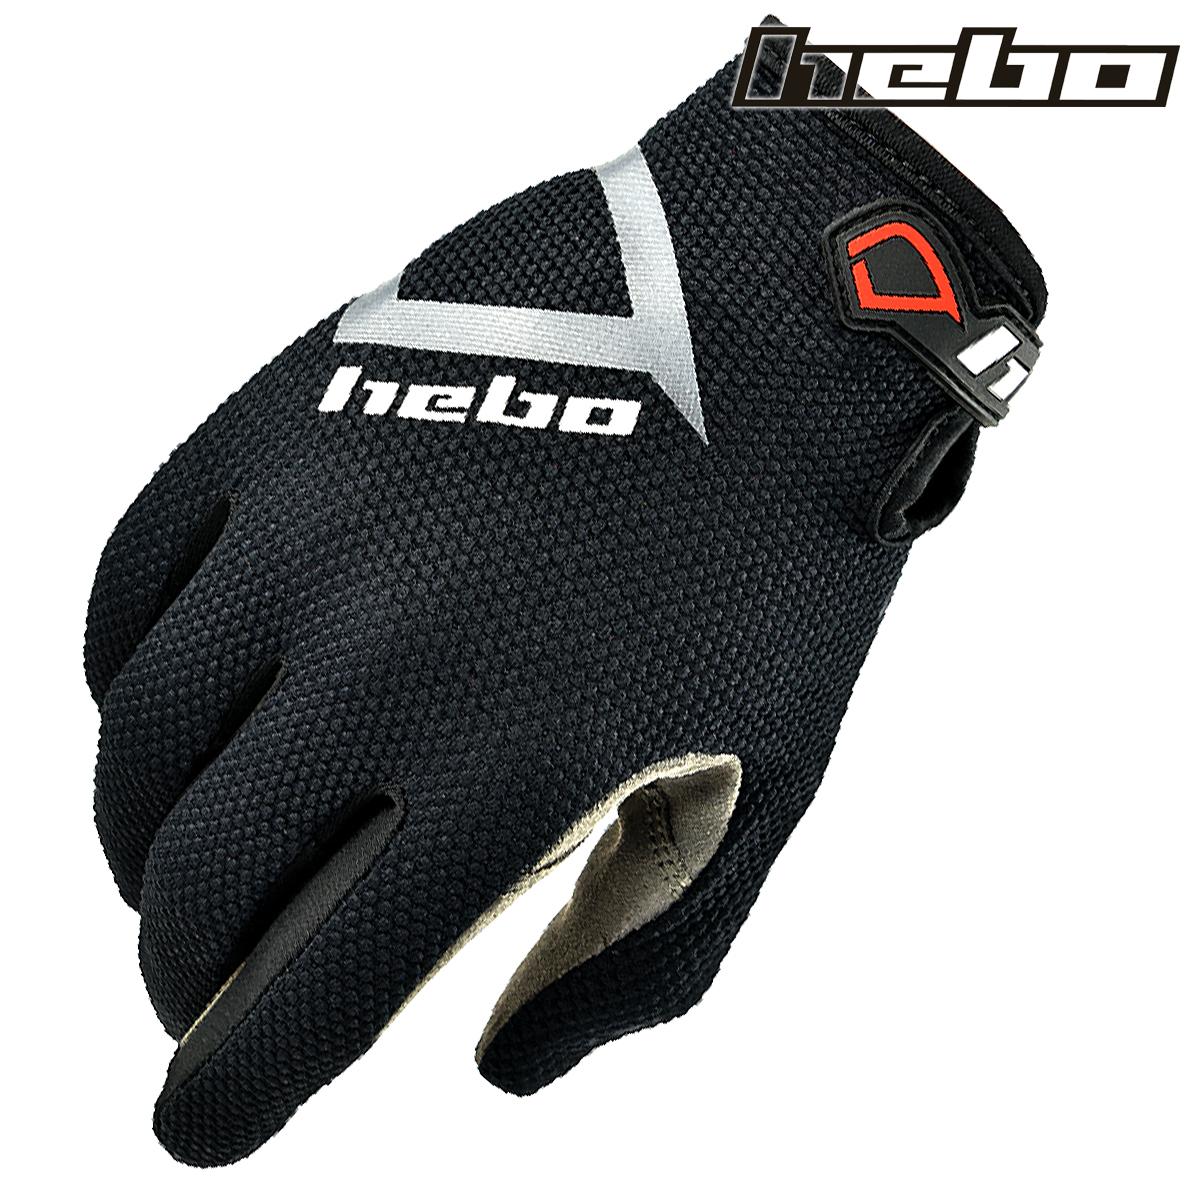 Hebo trials gloves